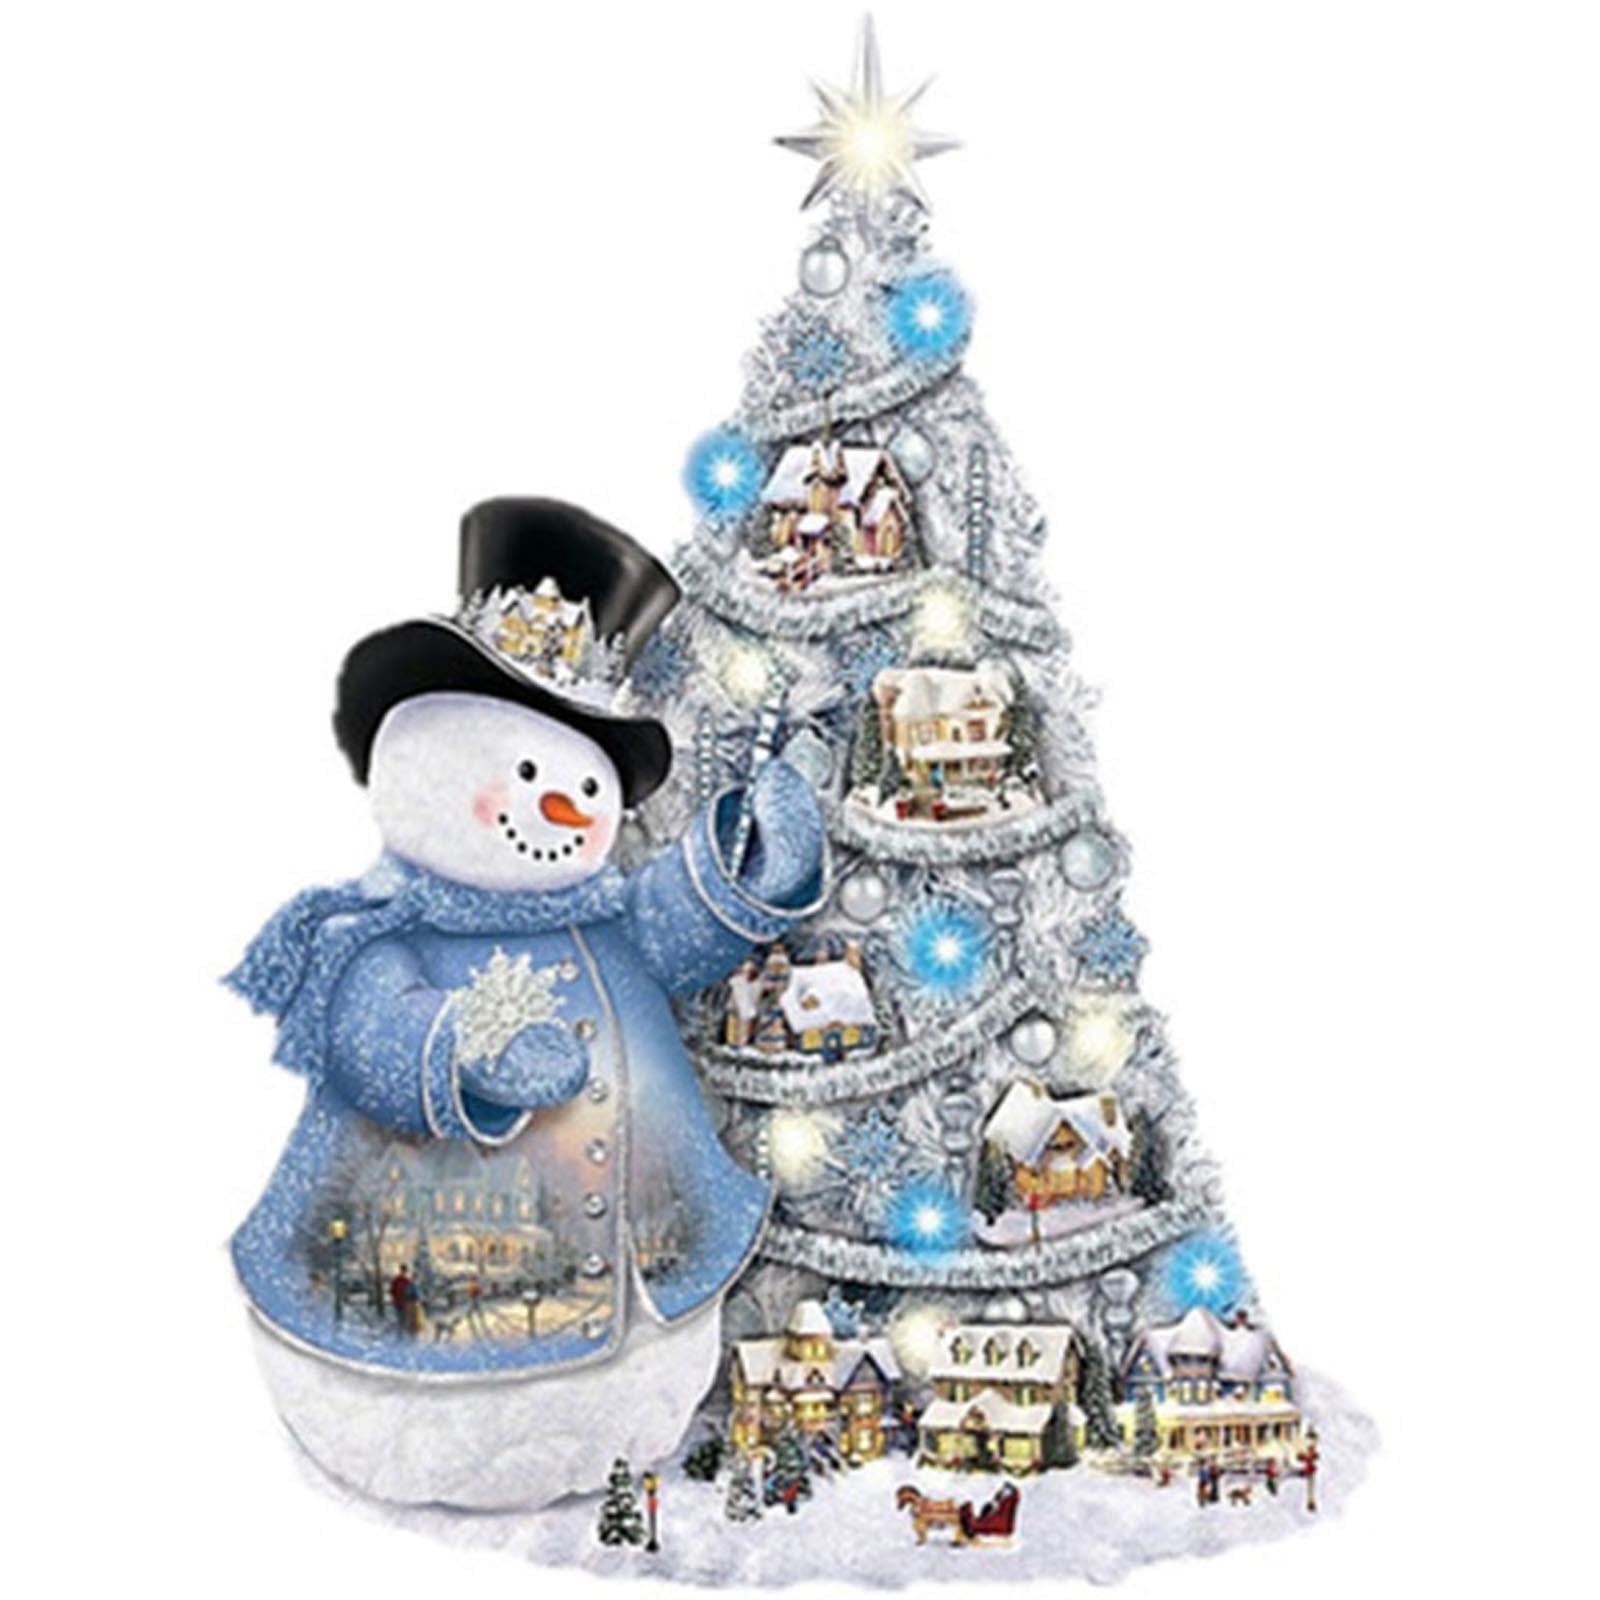 5D Diamond Painting Blue and Silver Christmas Ornaments Kit - Bonanza  Marketplace